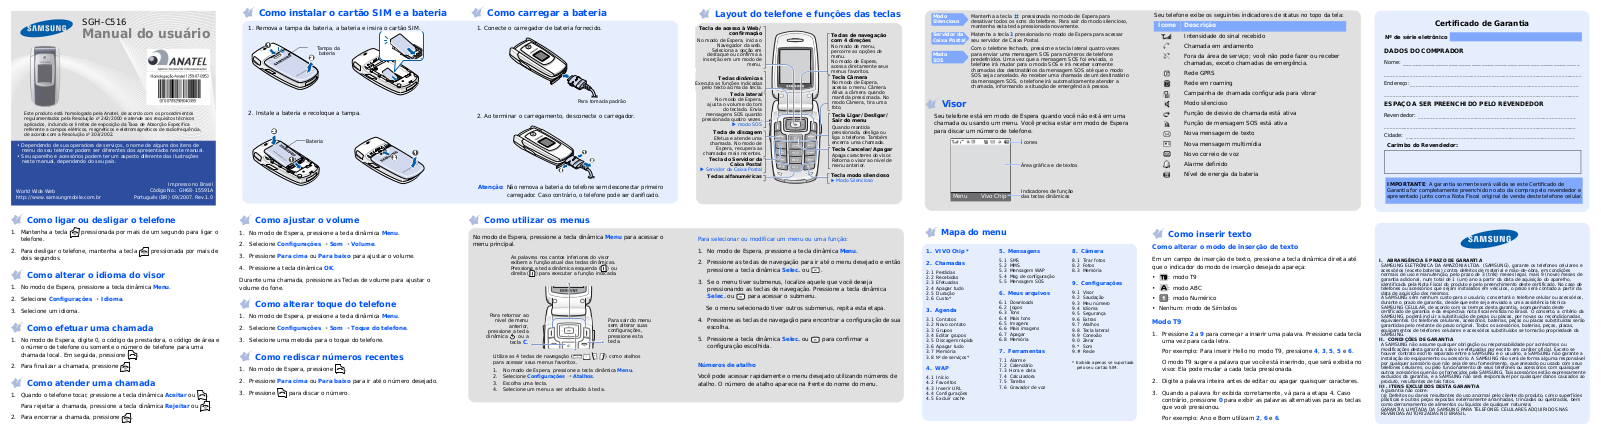 Samsung SGH-C516 User Manual